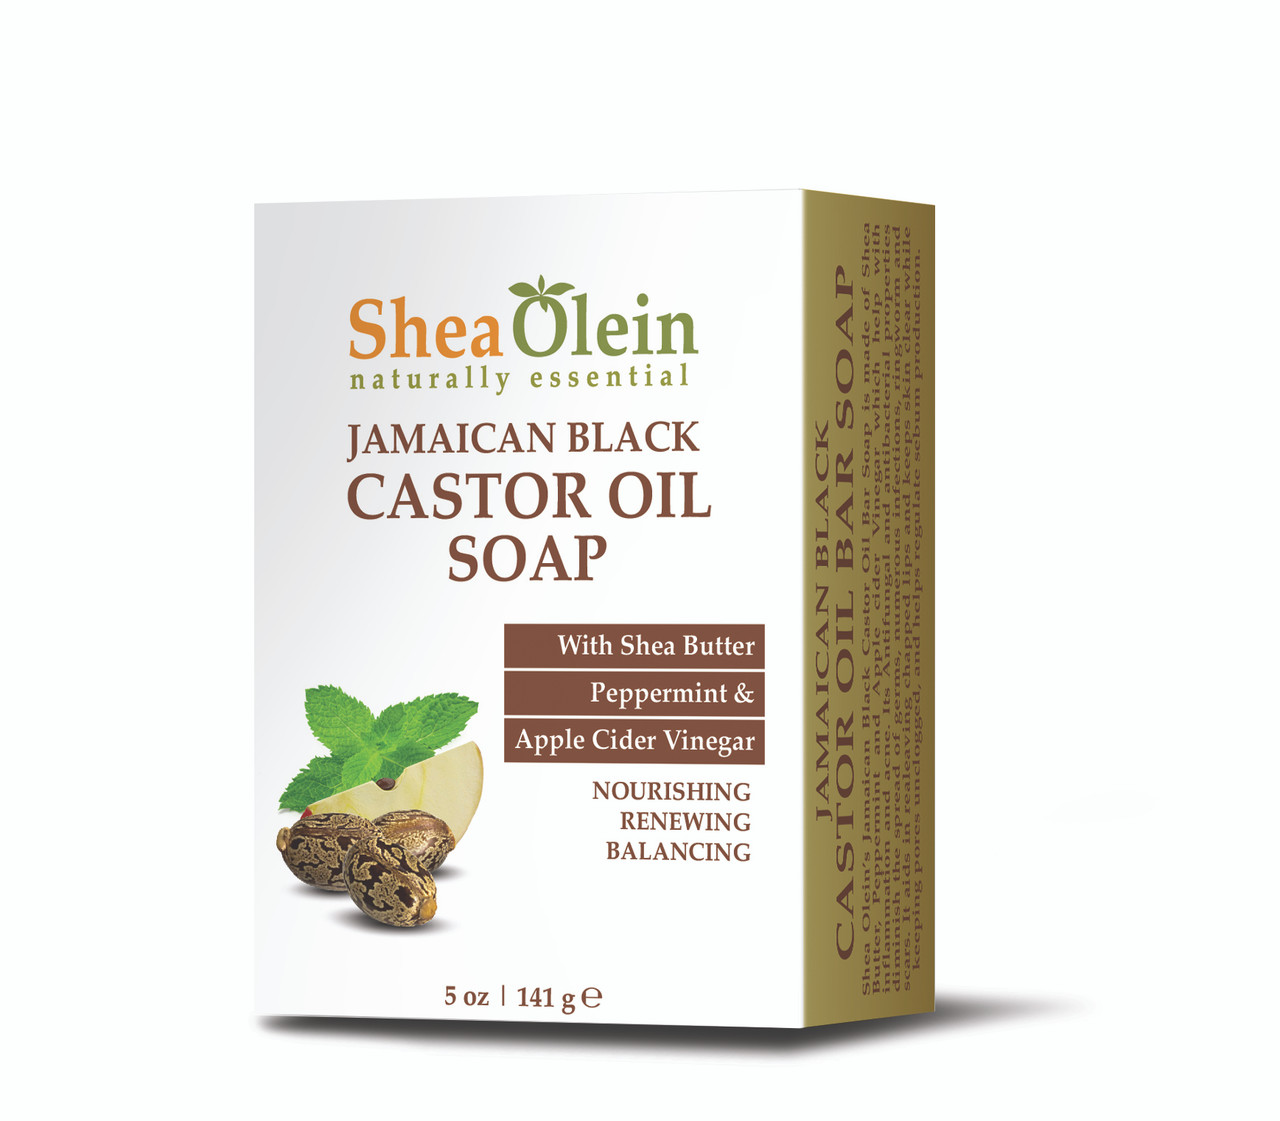 JAMAICAN BLACK CASTOR OIL SOAP